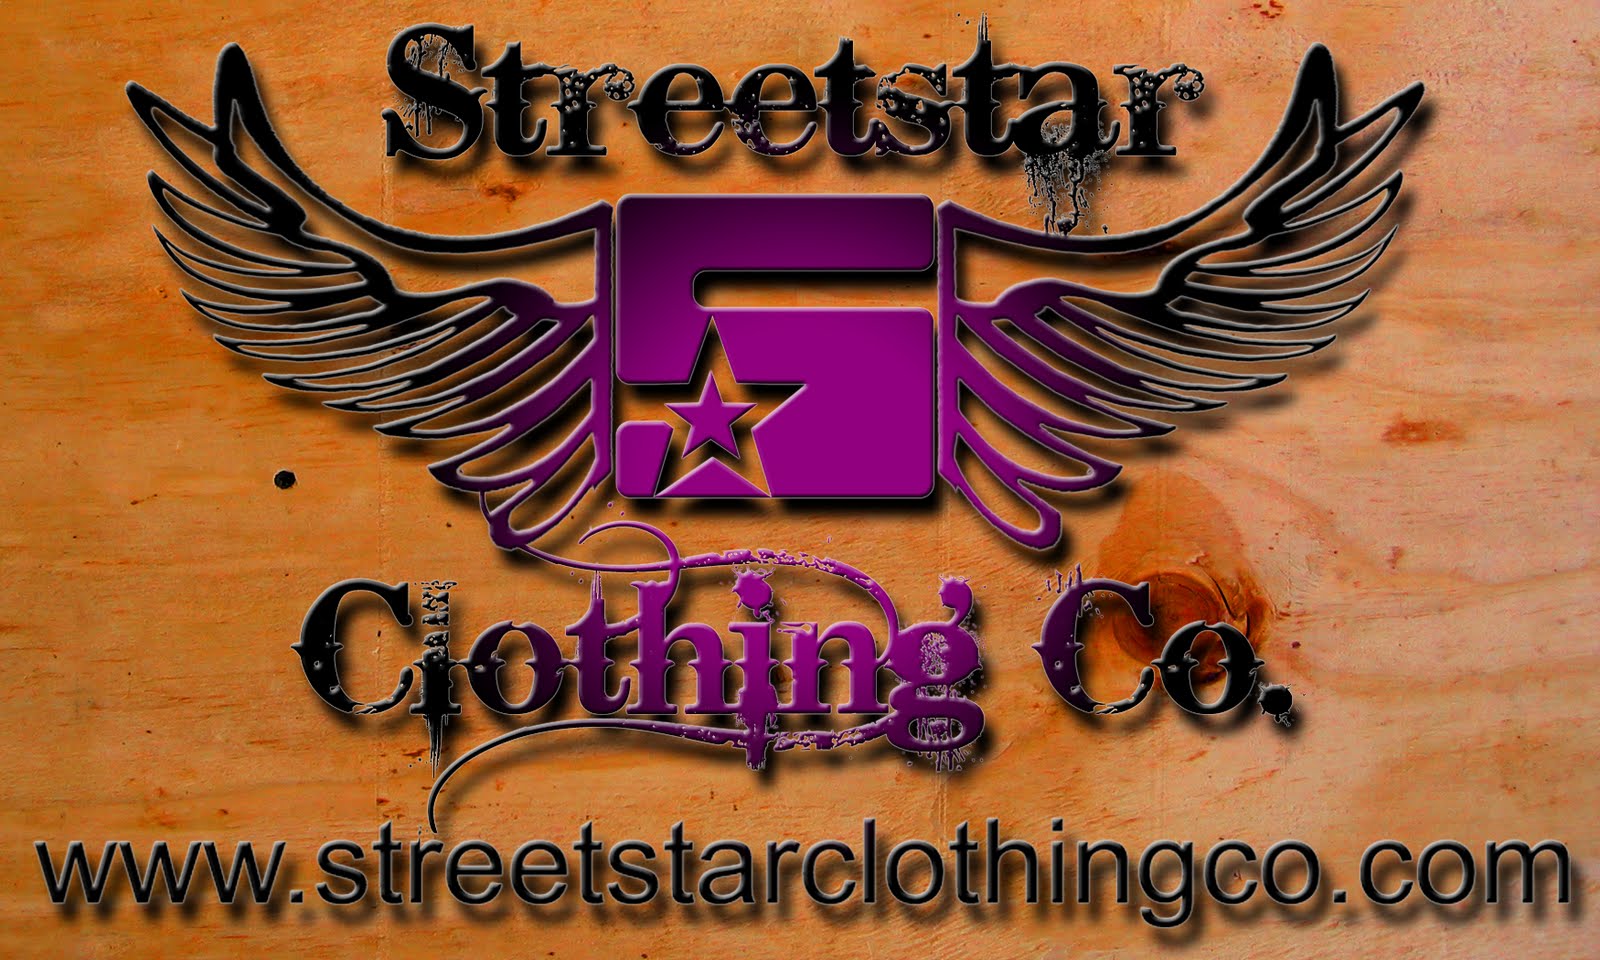 Street Star Clothing Co.